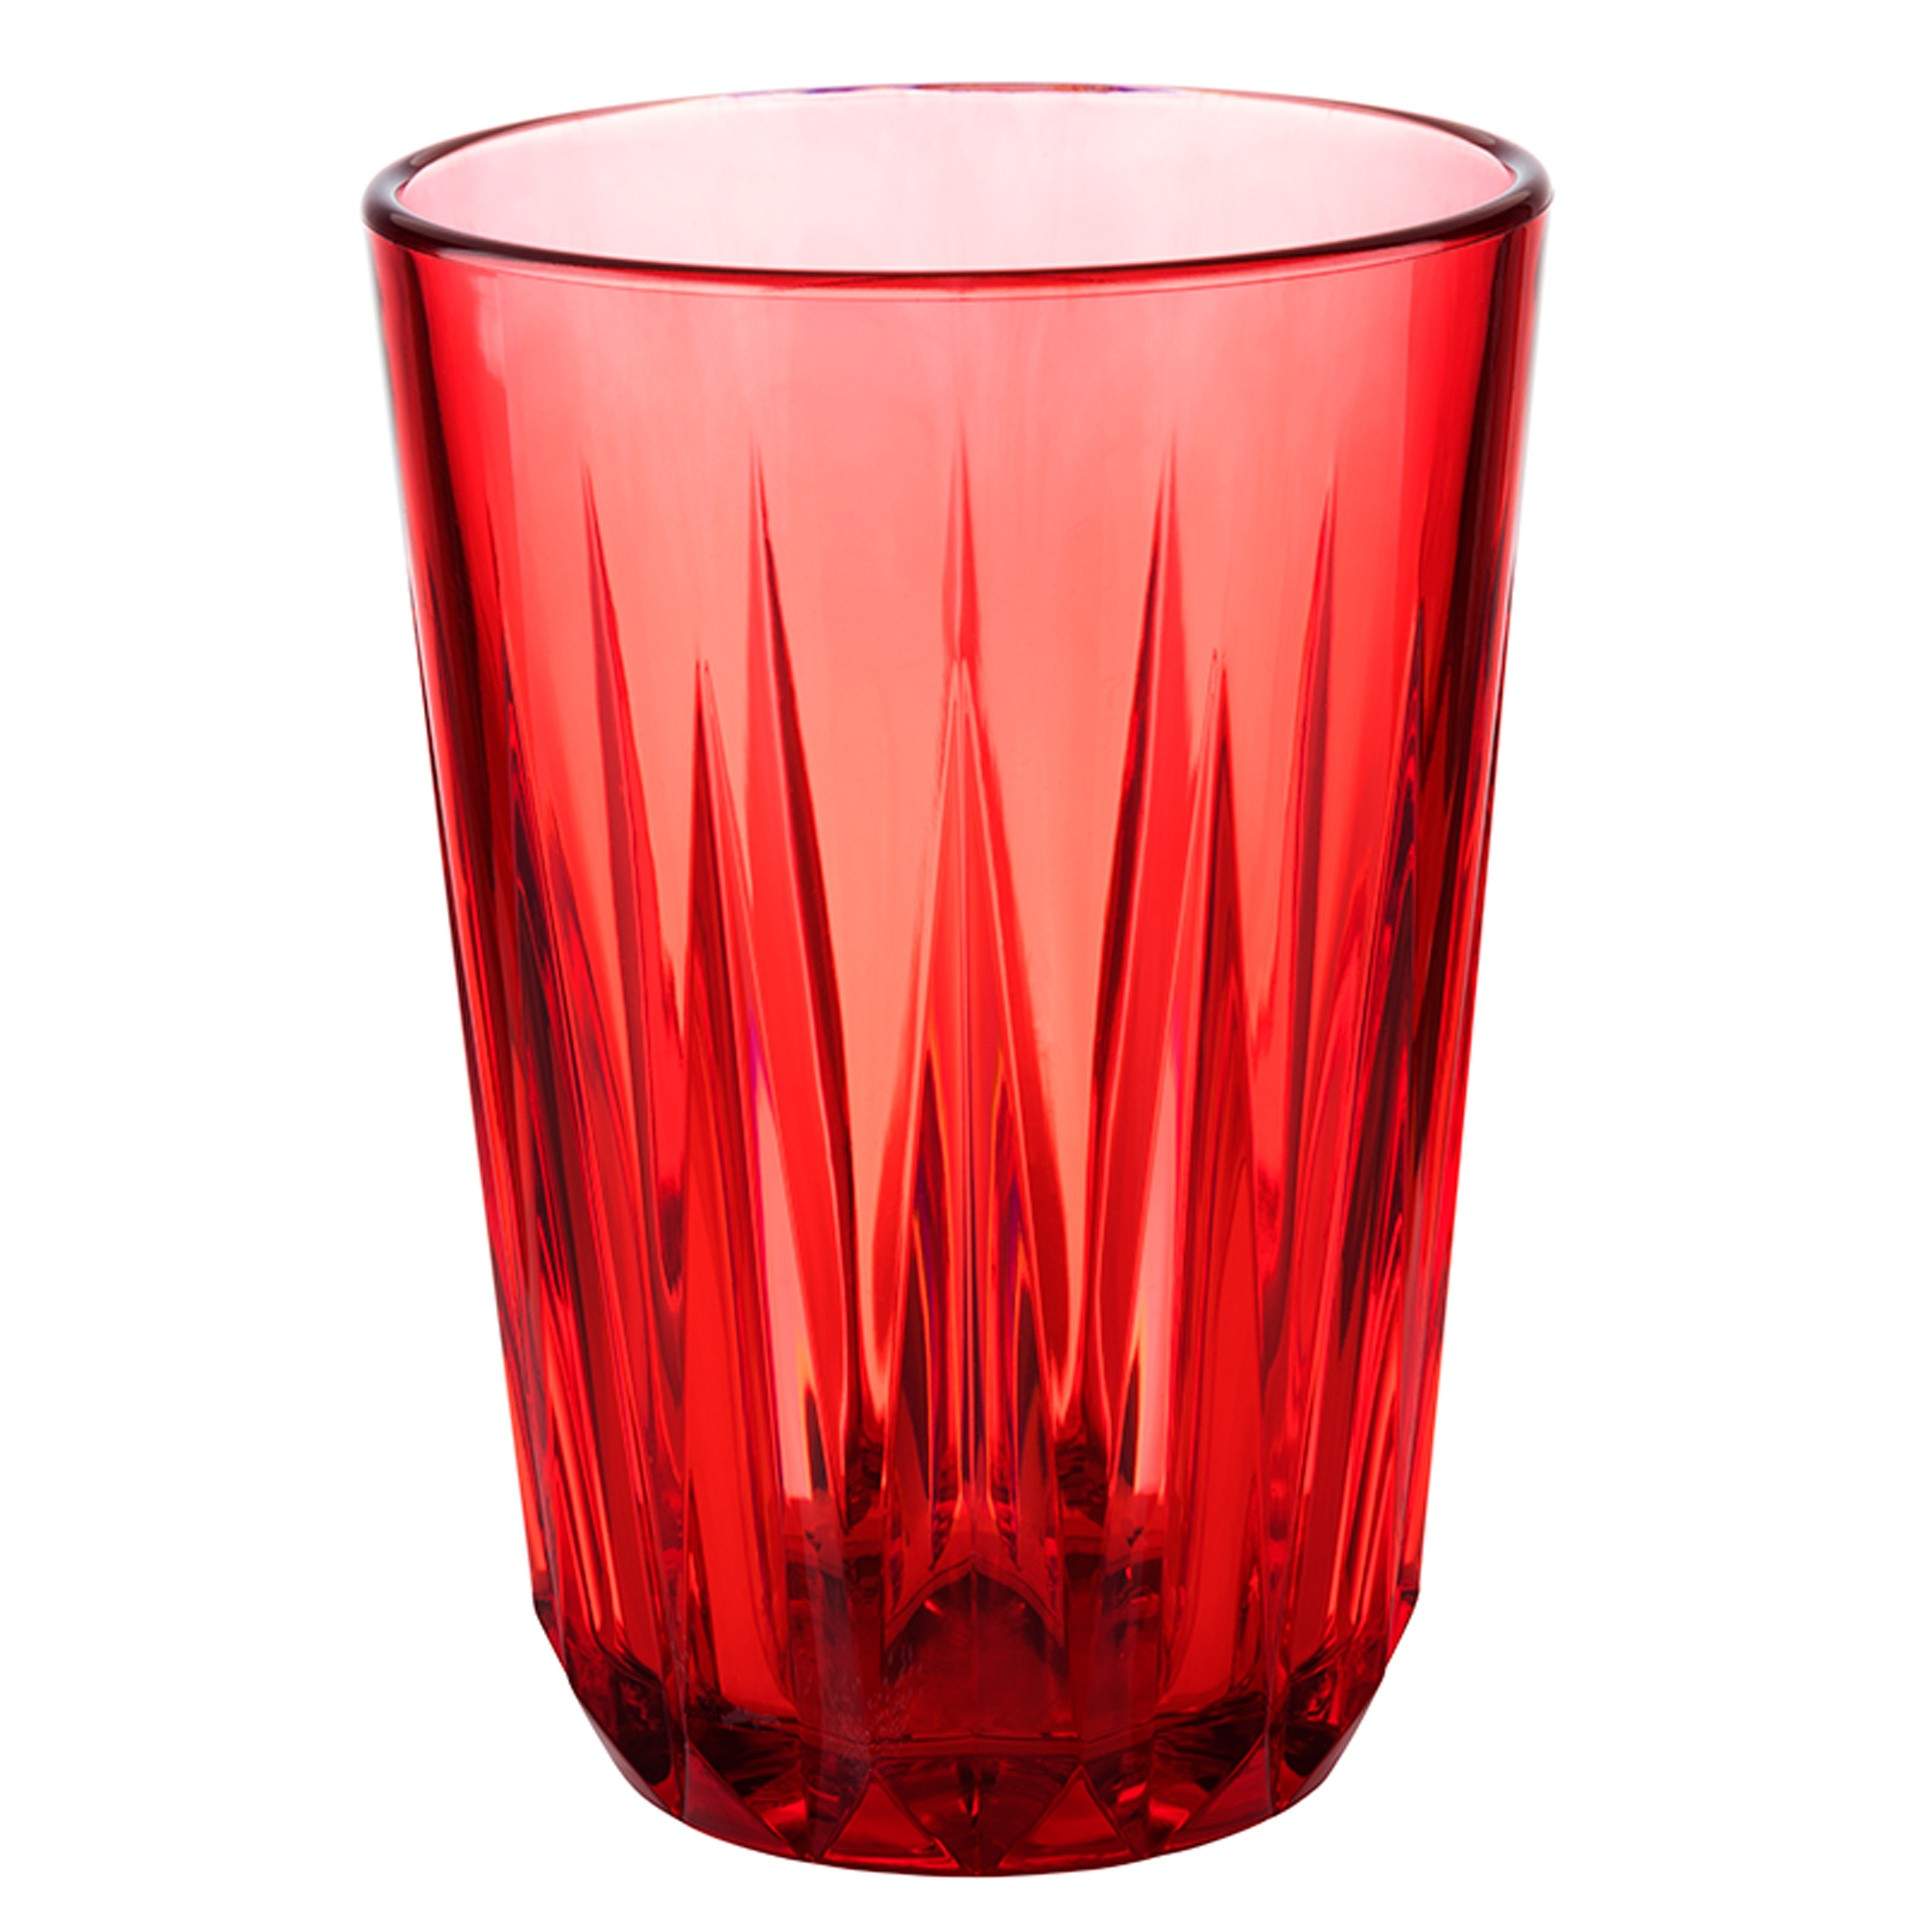 Trinkbecher - Serie Crystal - rot - Abm. 9,5 cm - Ø 7,0 cm - Inhalt 0,15 l - Tritan - 10510-B